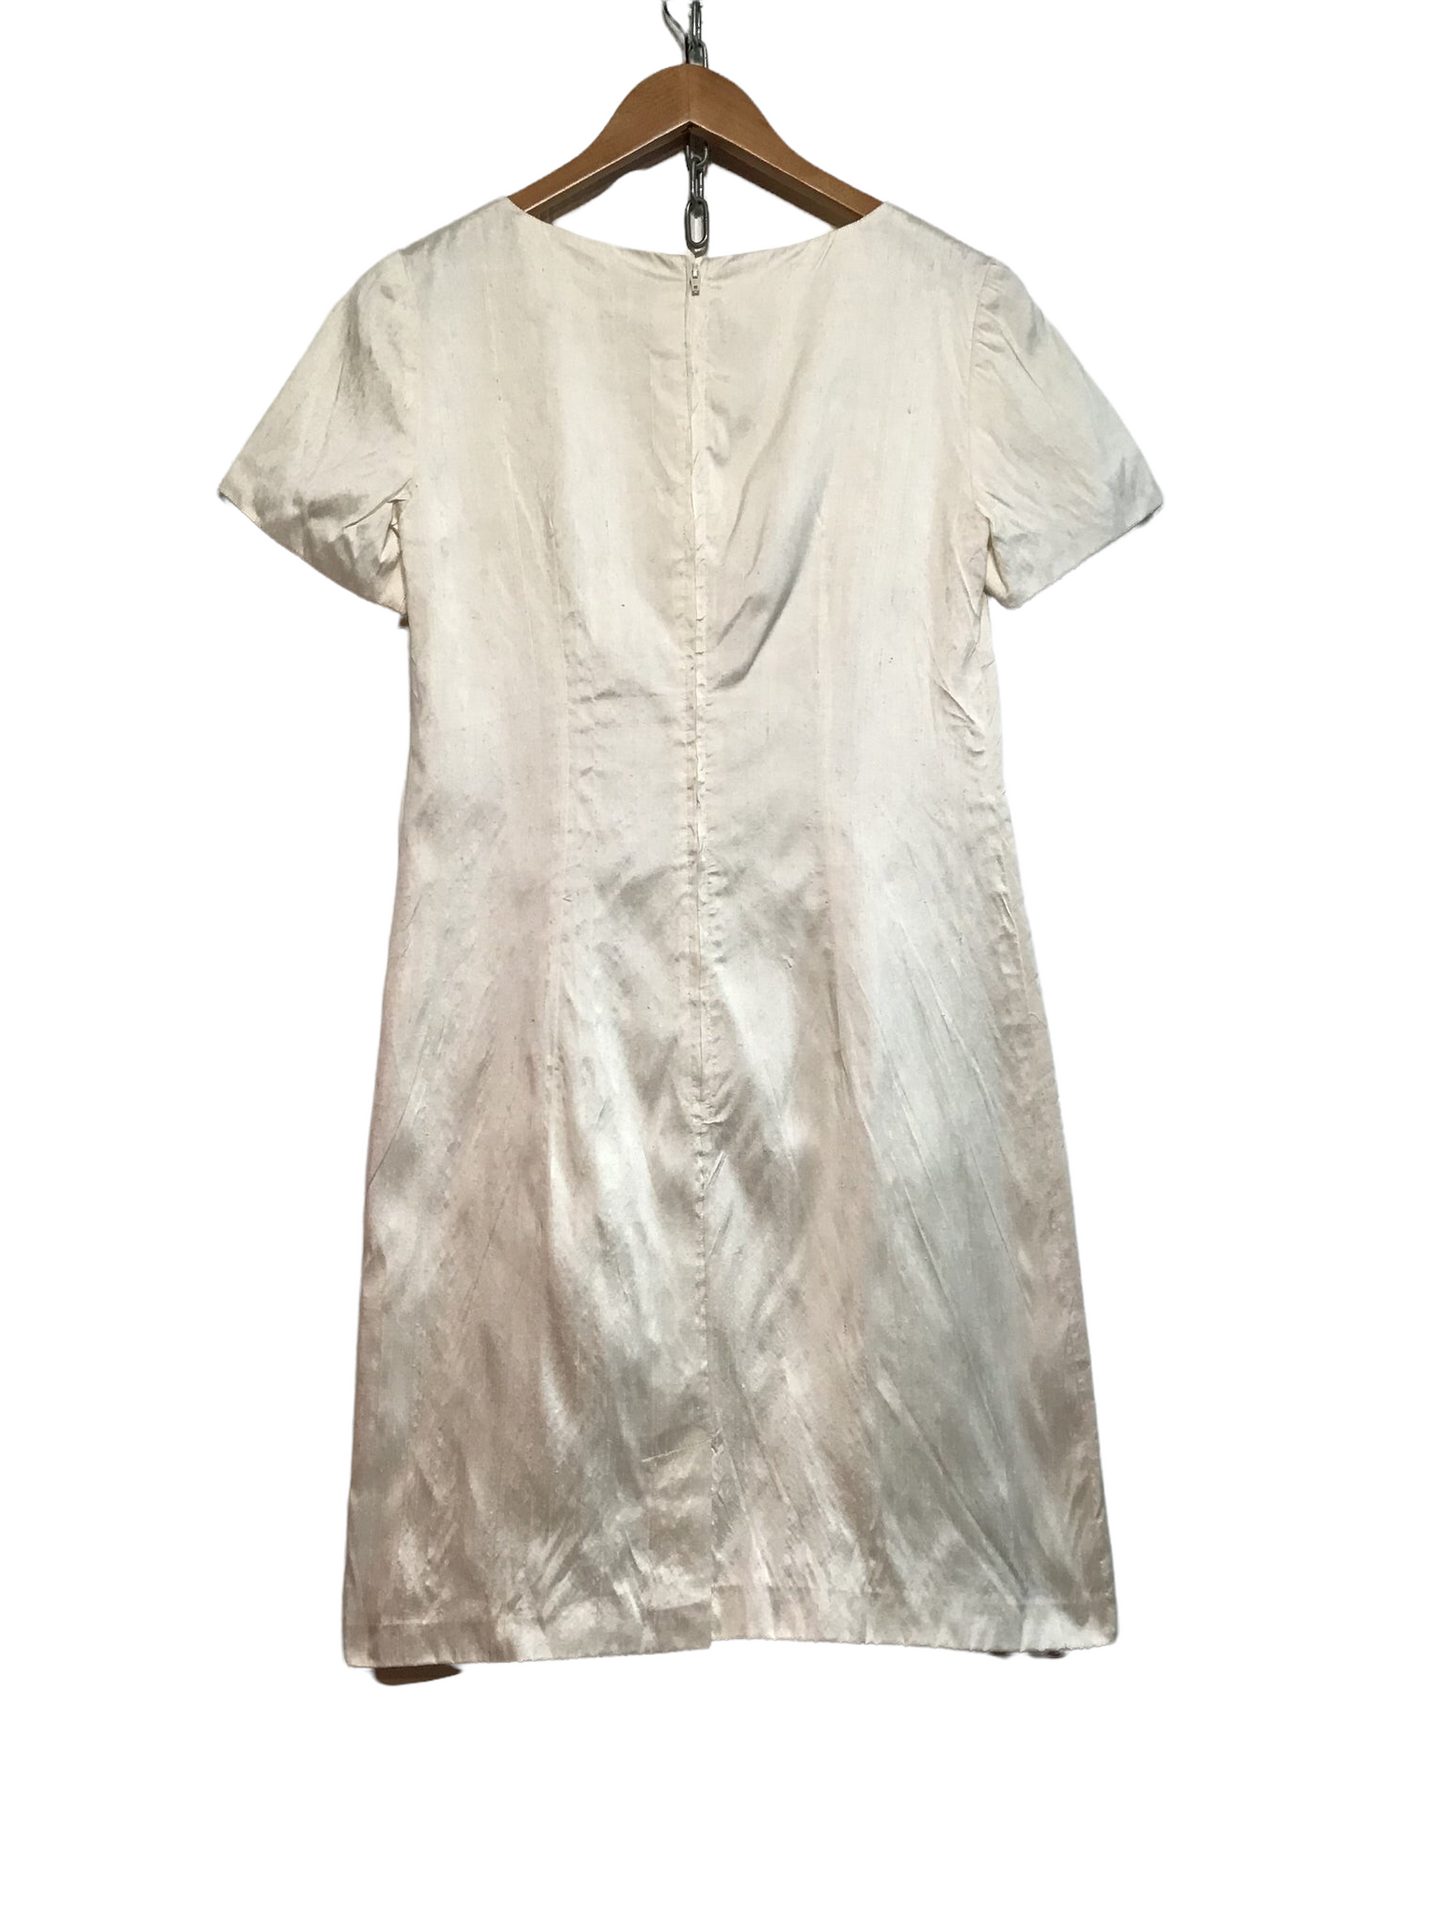 60s Handmade Shift Dress (Size M)